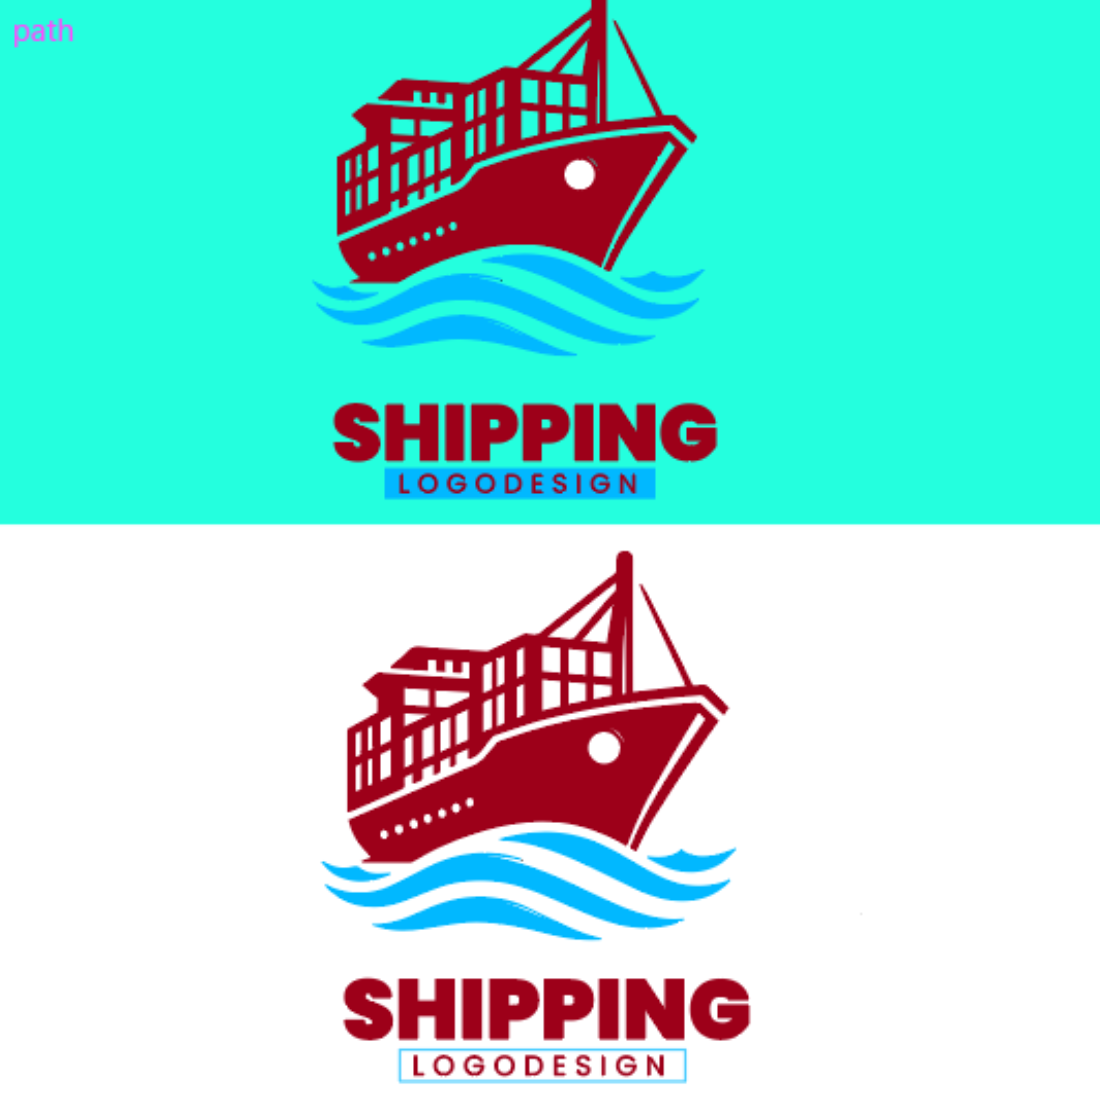 Luxury shipping logo design cover image.